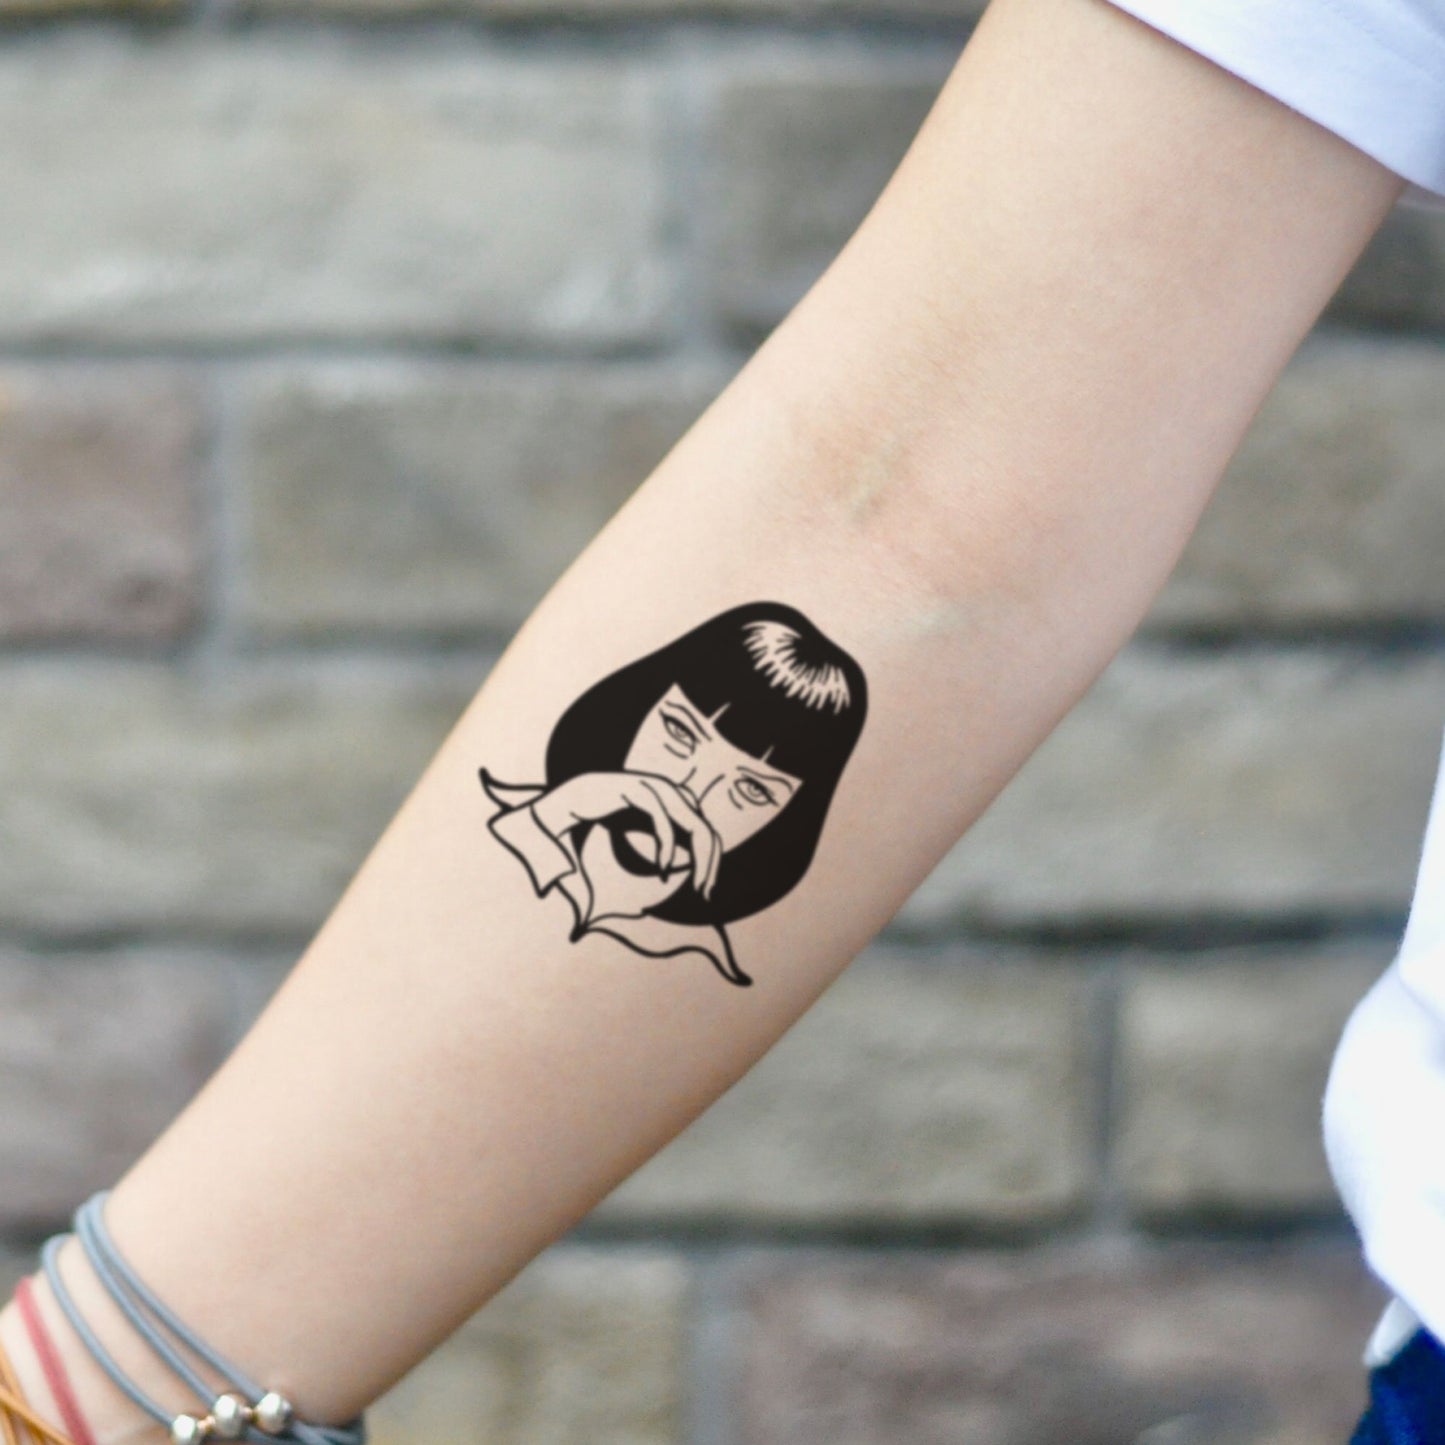 fake small mia wallace outline pulp fiction portrait temporary tattoo sticker design idea on inner arm